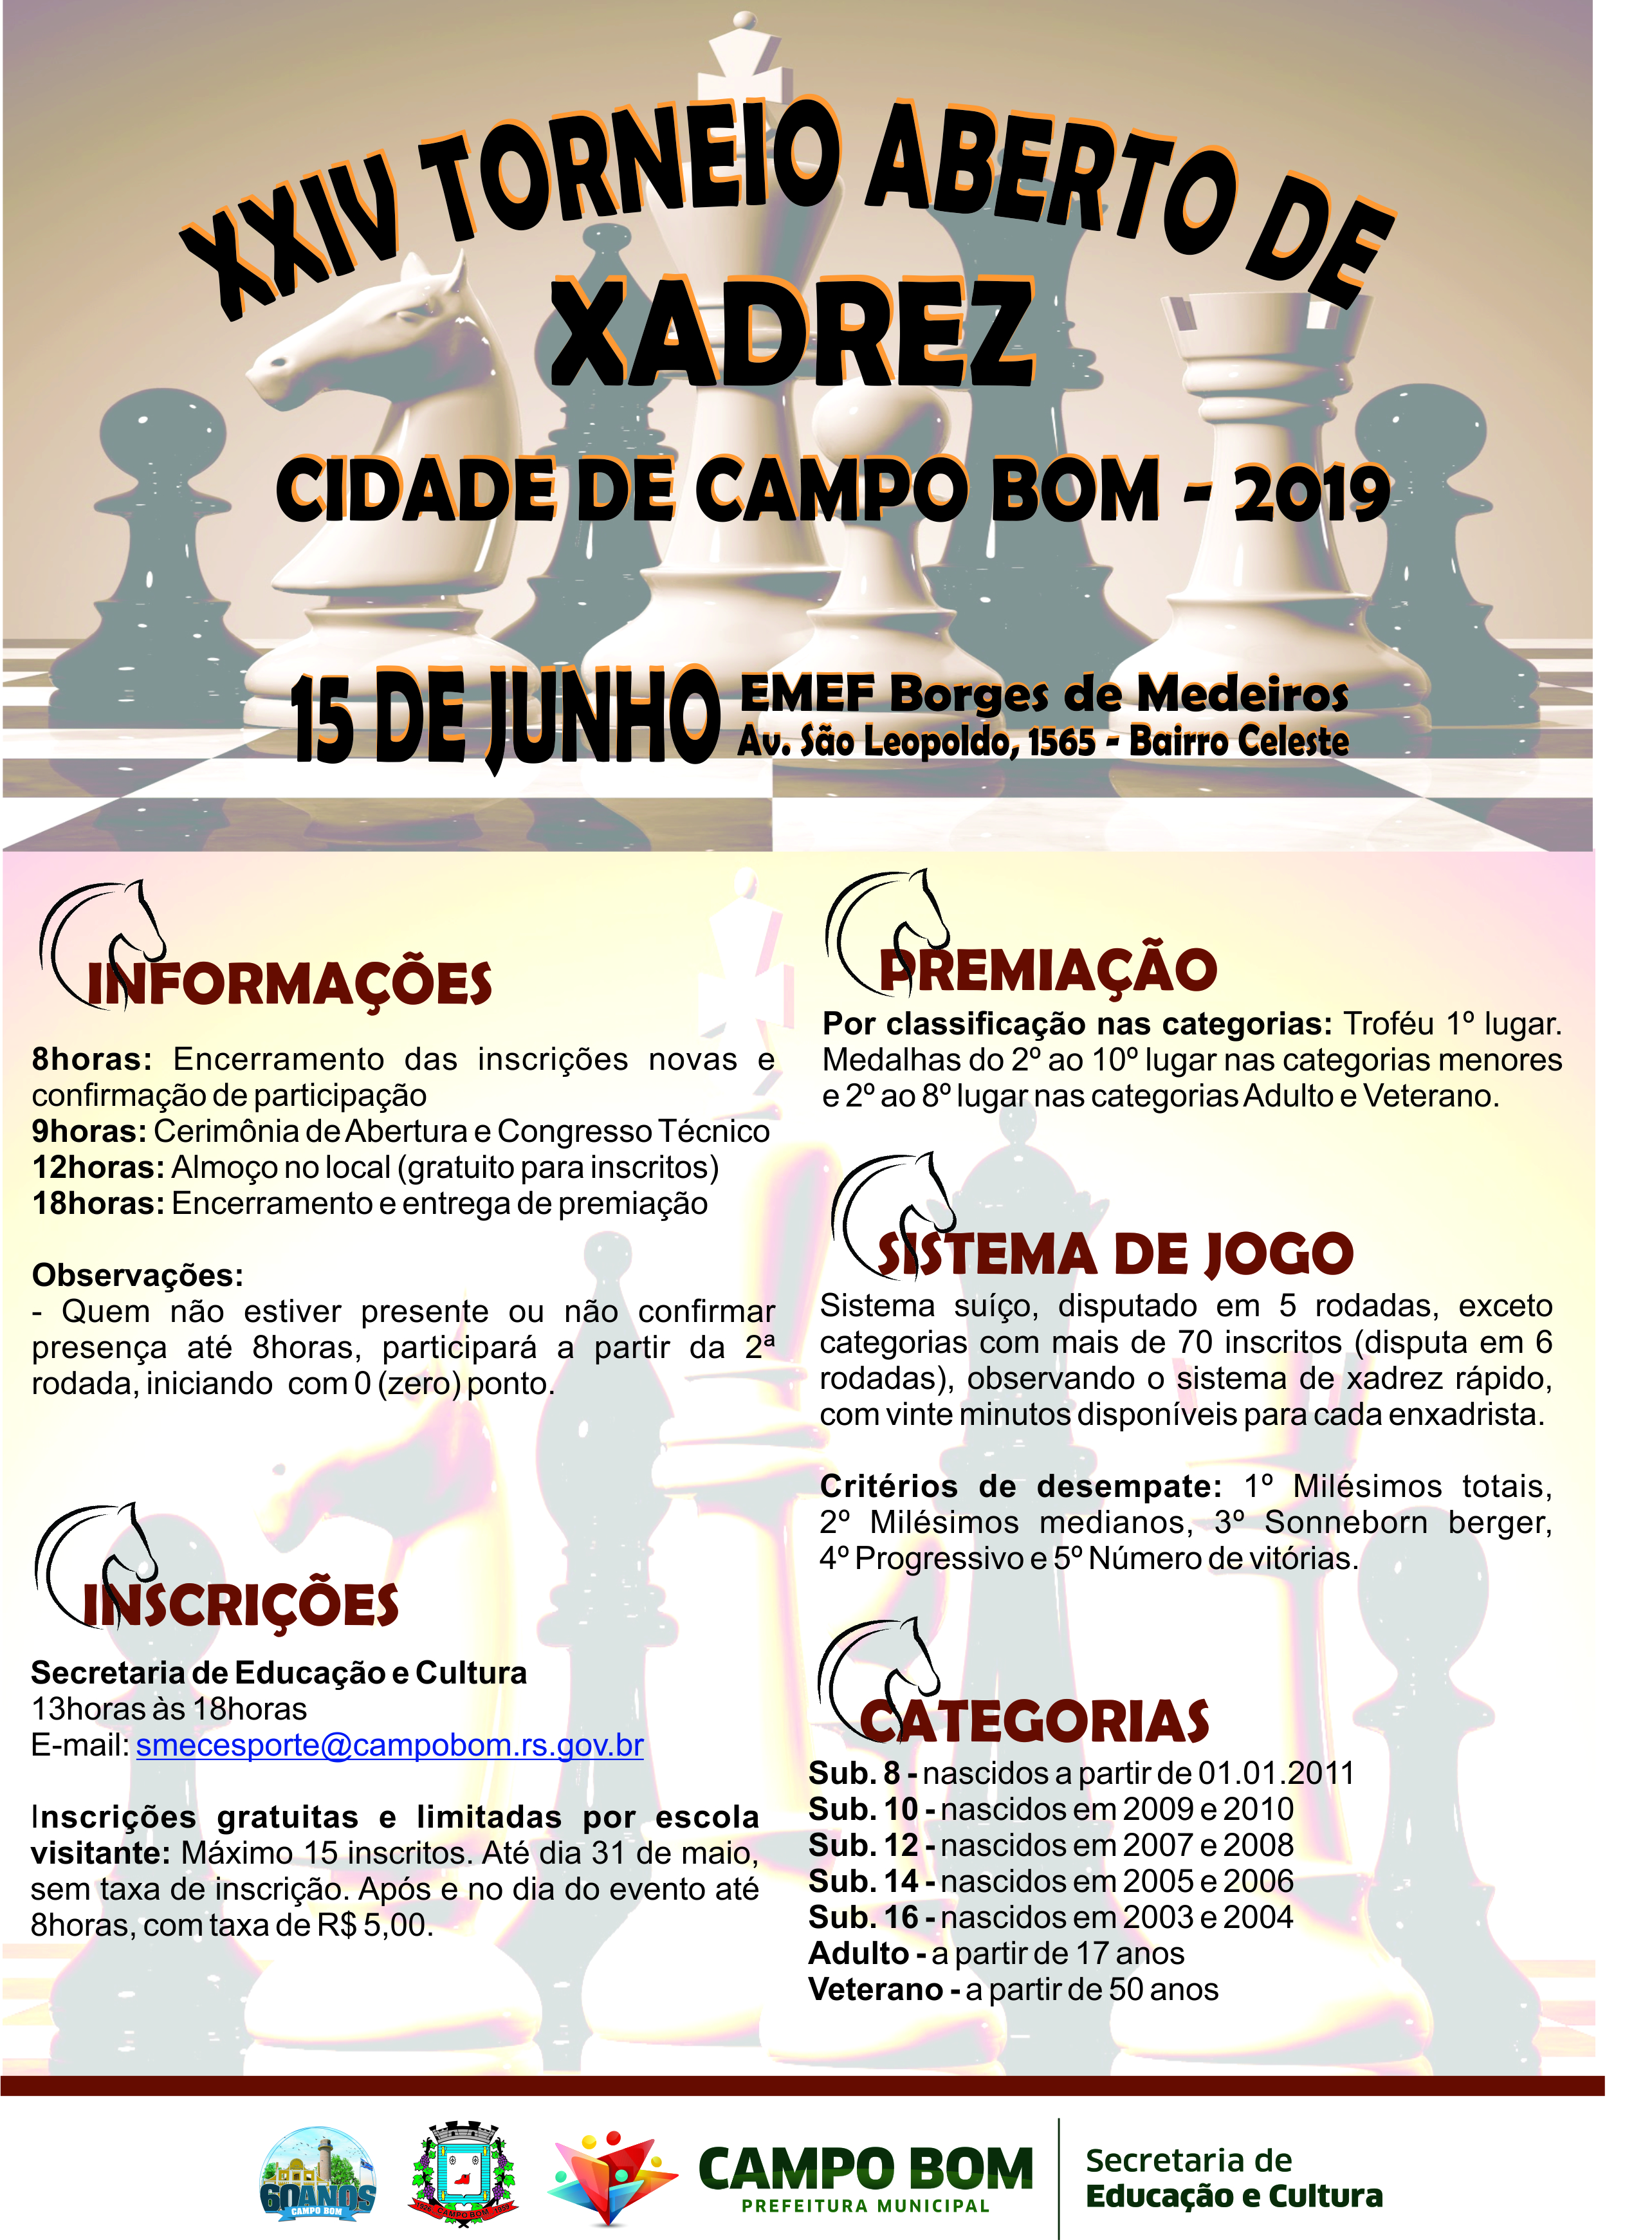 Floripa Chess Open 2023 - Rodada 8 